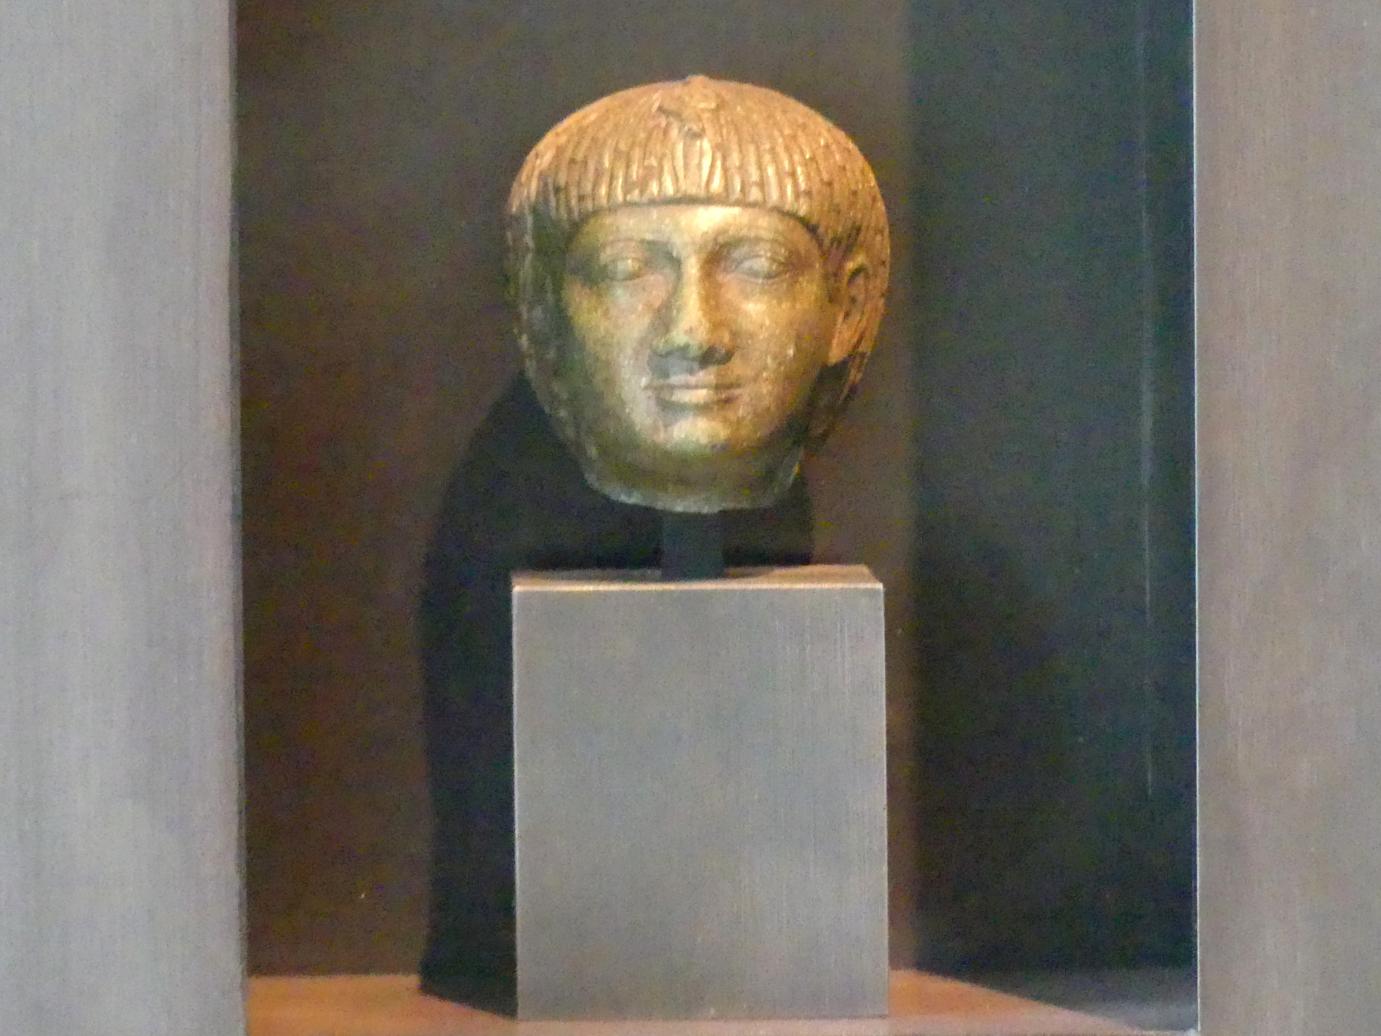 Kopf einer Statue des Pharao Osorkon I., 22. Dynastie, Undatiert, 900 v. Chr., Bild 2/3